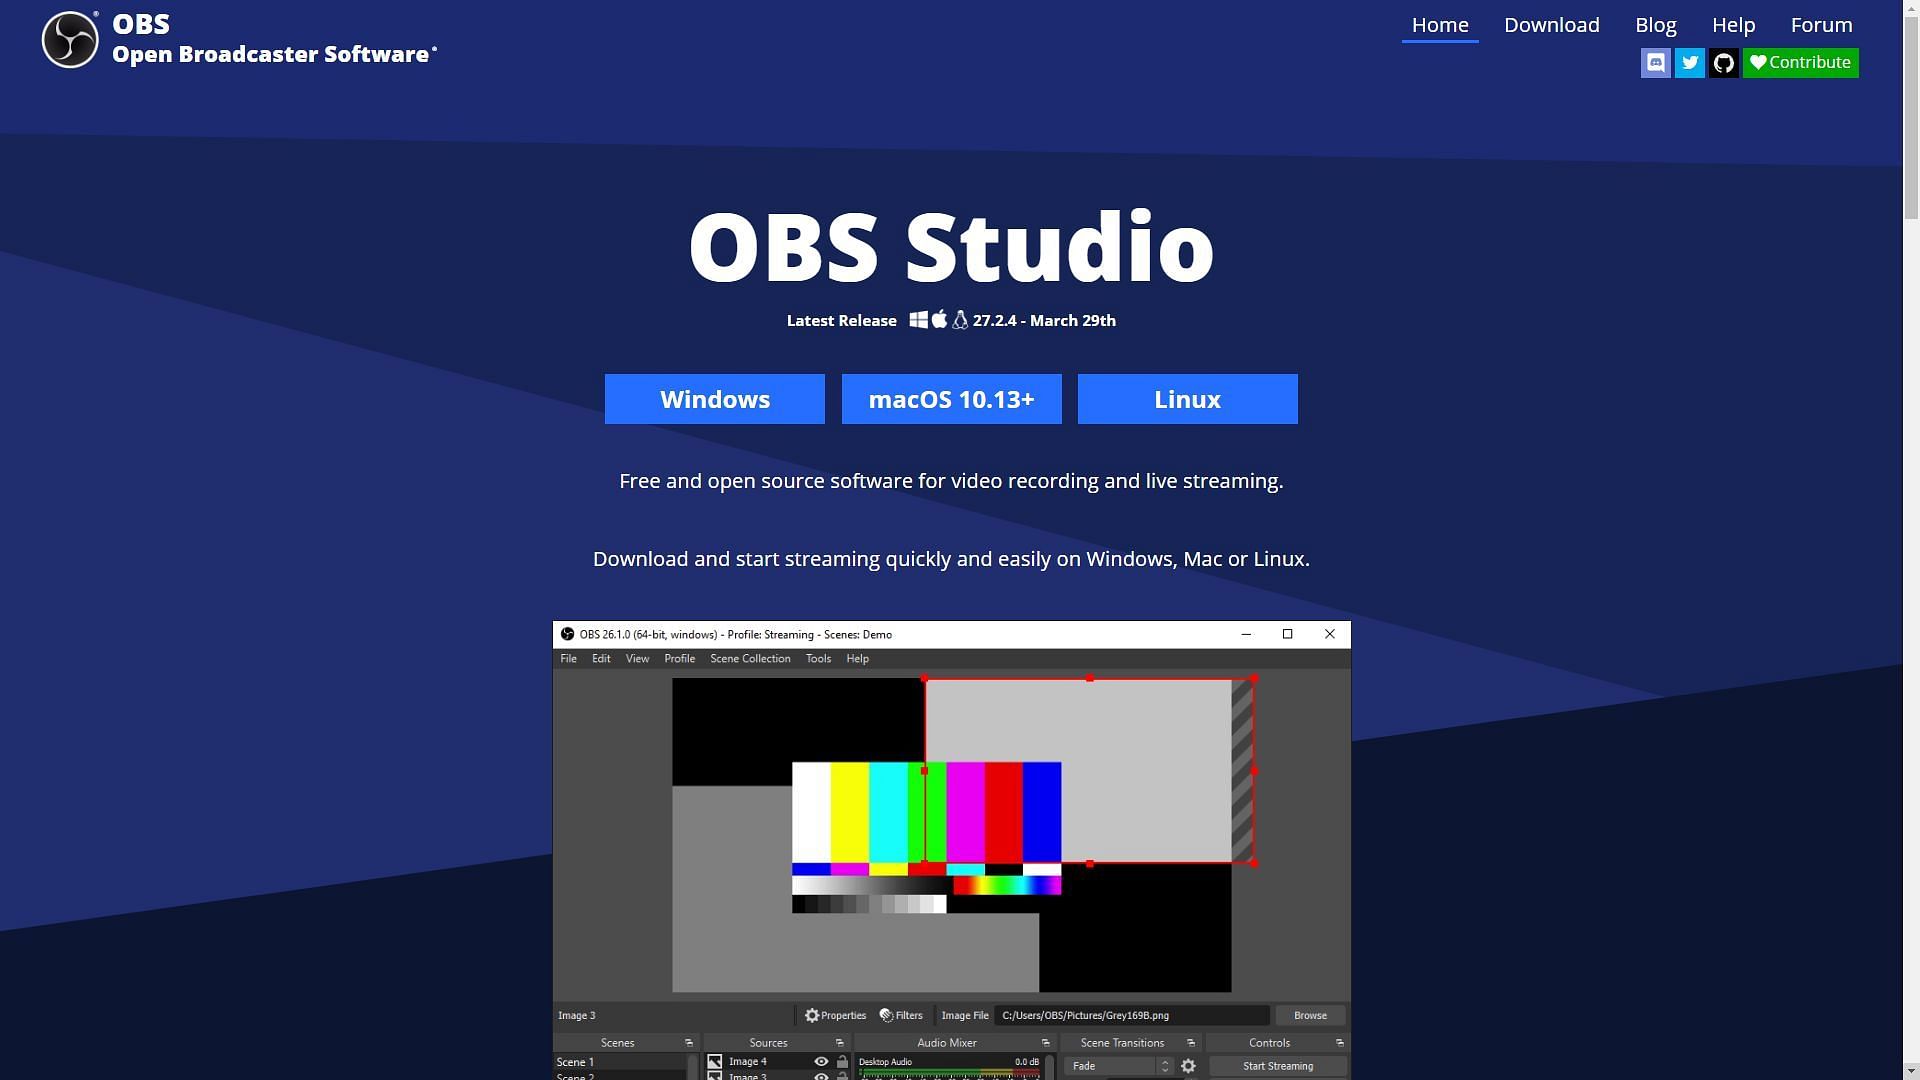 OBS website (Image by Sportskeeda)